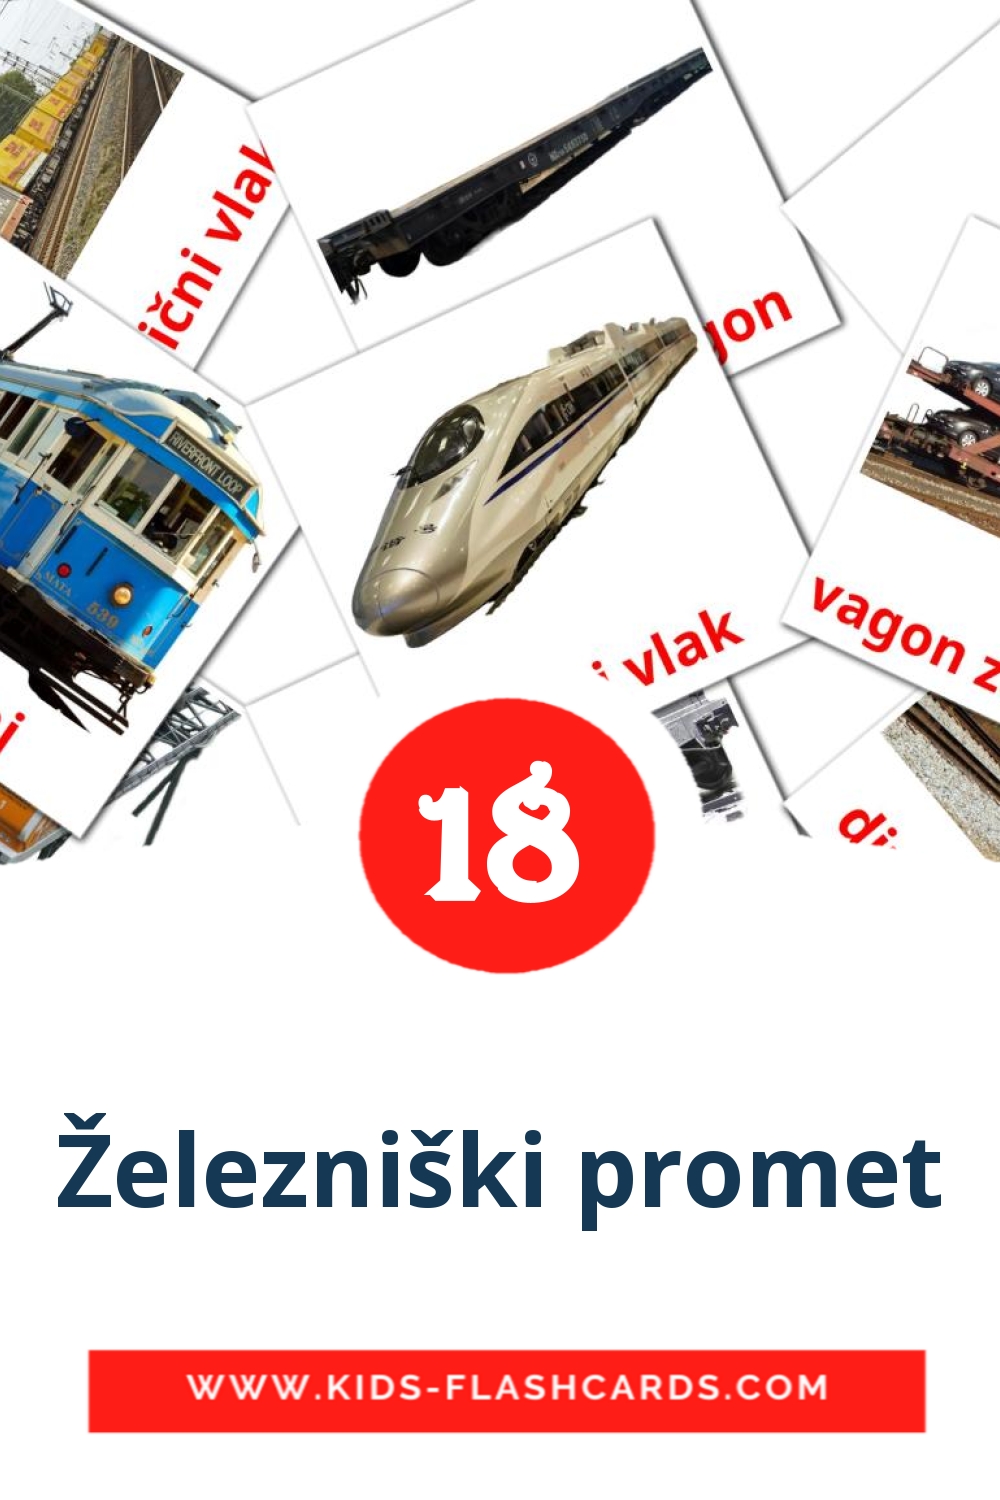 Železniški promet на словенском для Детского Сада (18 карточек)